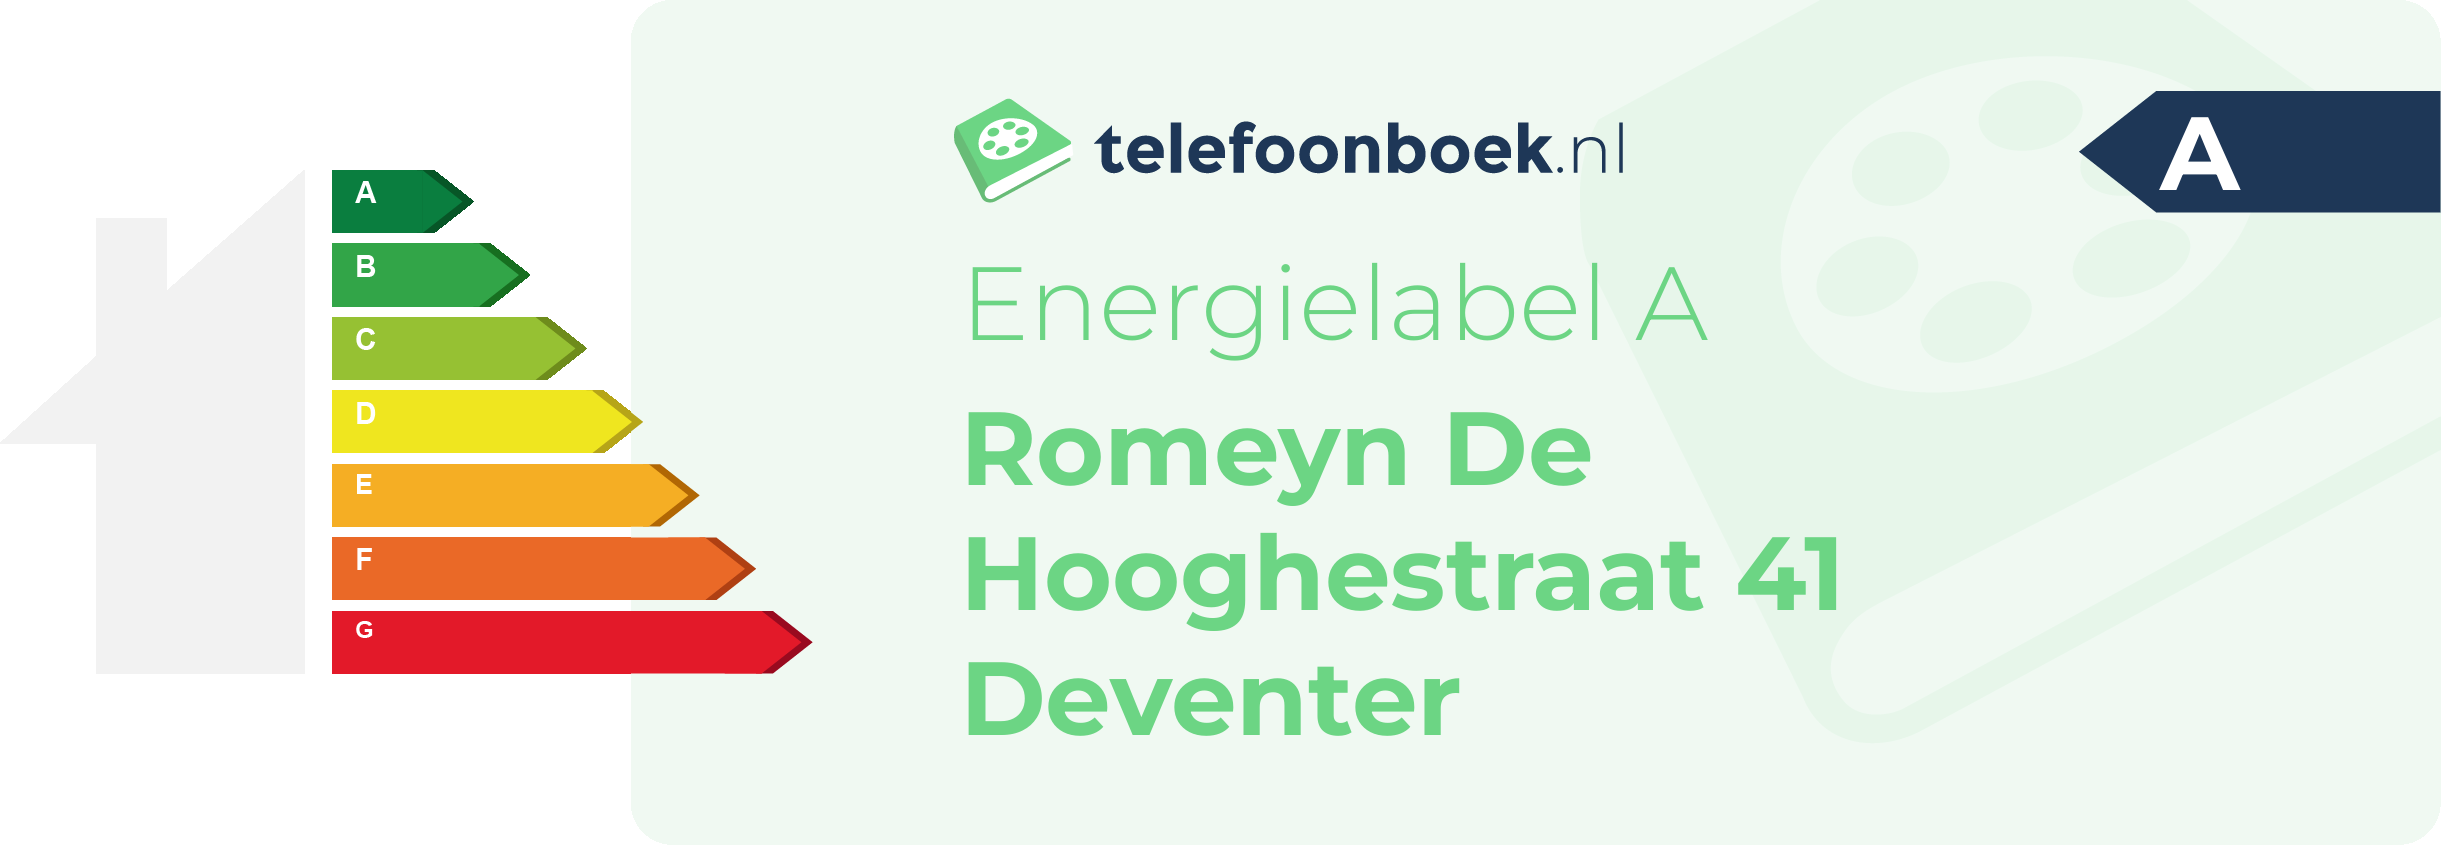 Energielabel Romeyn De Hooghestraat 41 Deventer